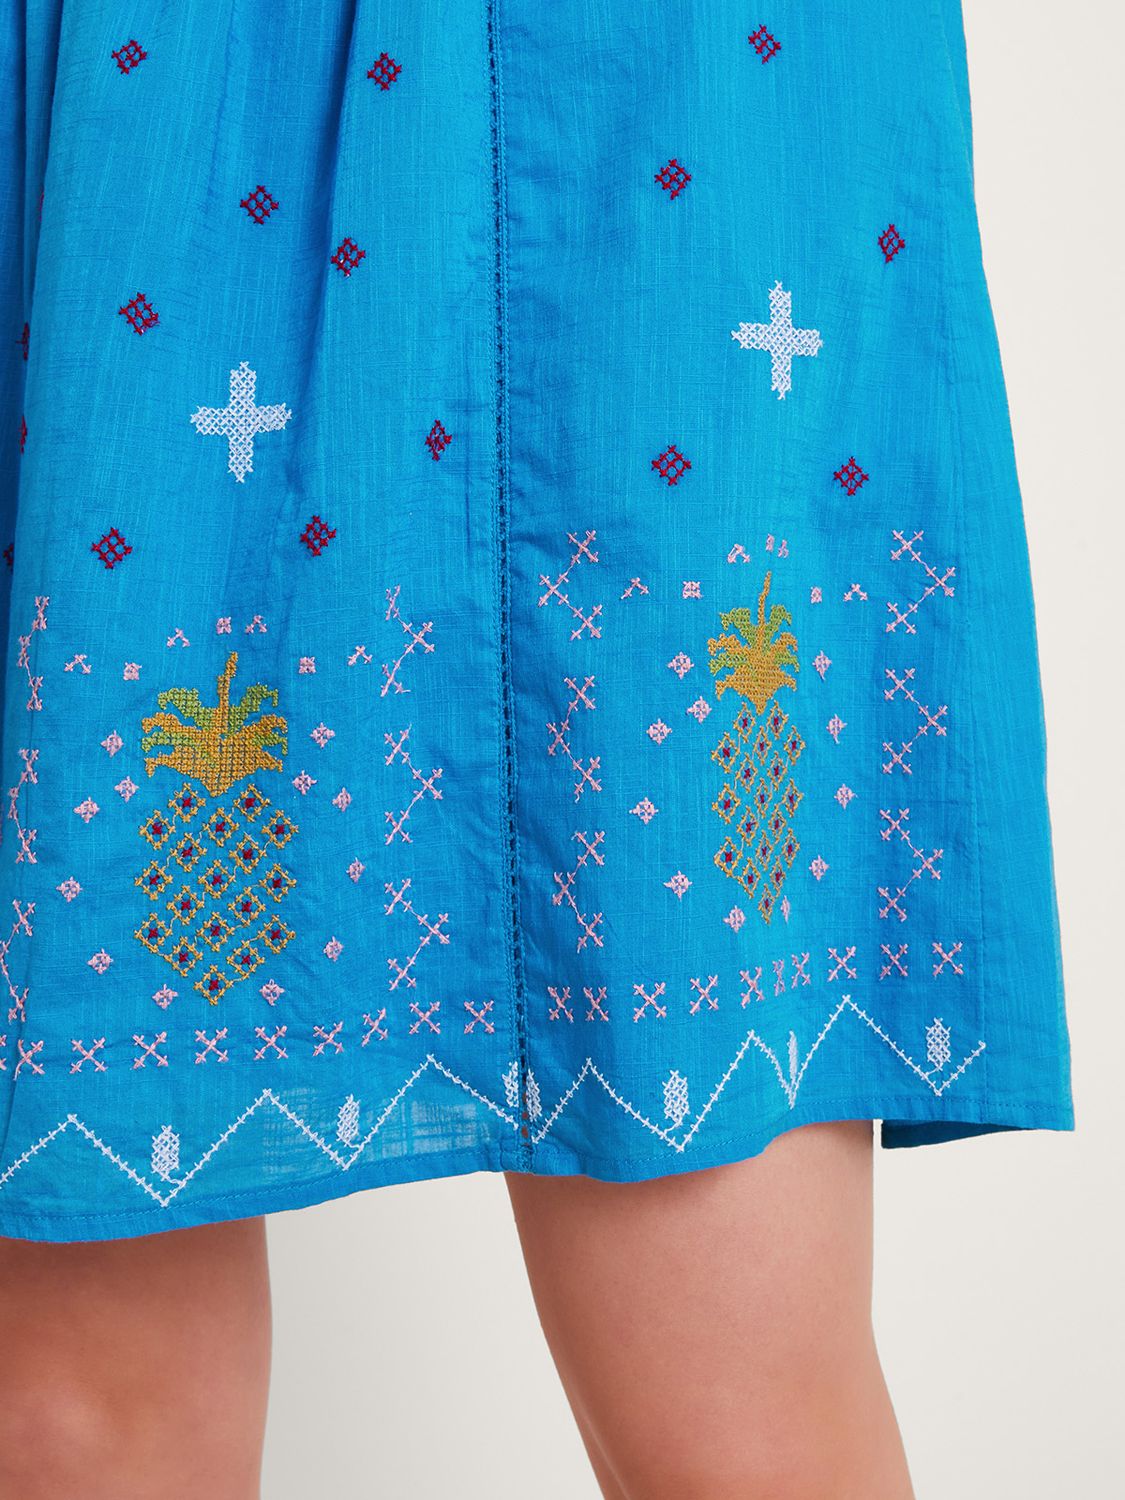 Monsoon Prue Pineapple Embroidery Cotton Dress, Blue, S